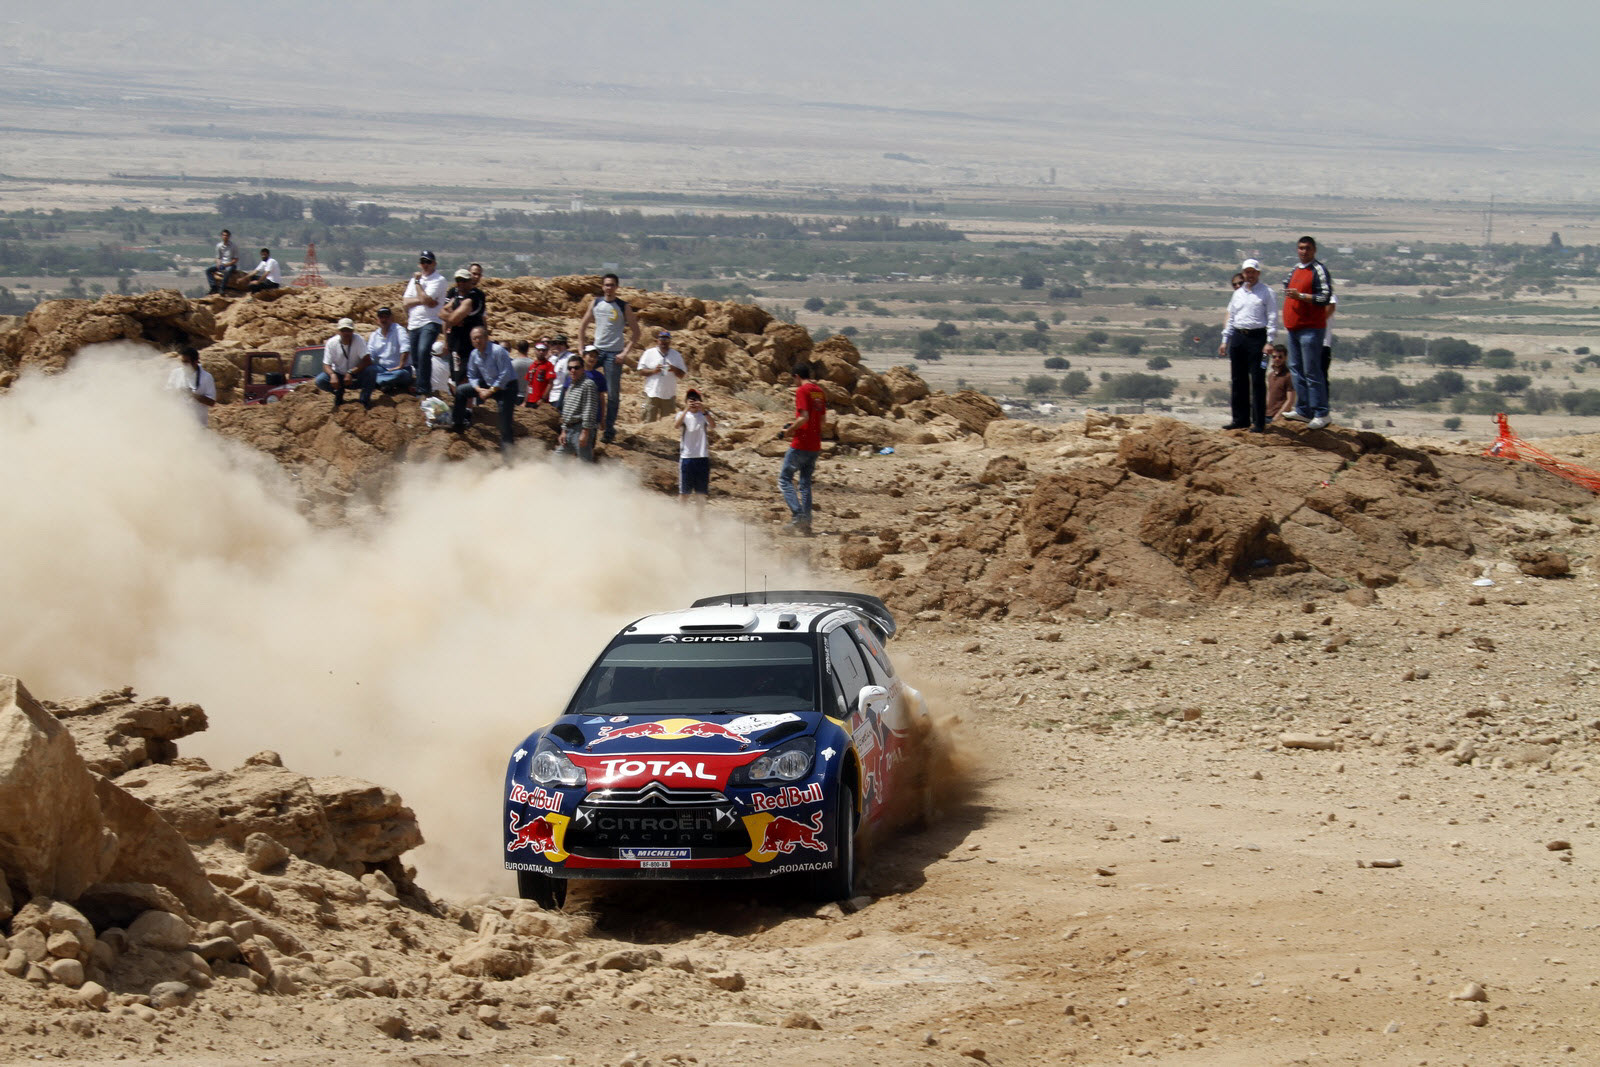 2011_WRC-Jordan_19.jpg